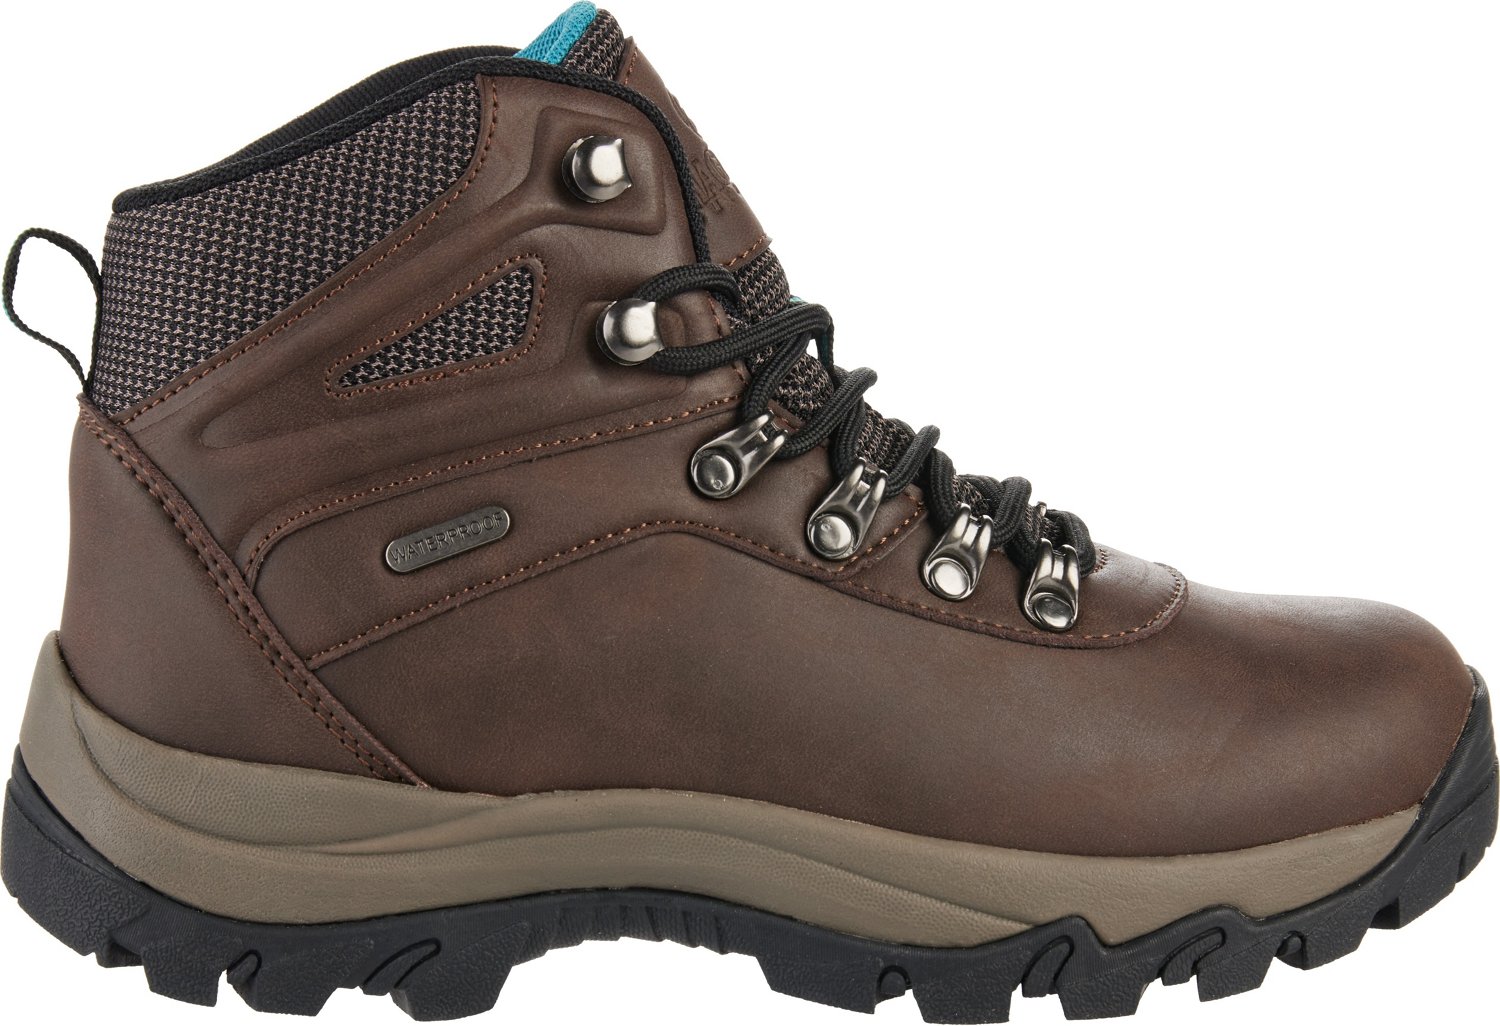 Magellan Outdoors Womens Caprock Hiking Boots Shoes Waterproof Size 10B  Brown